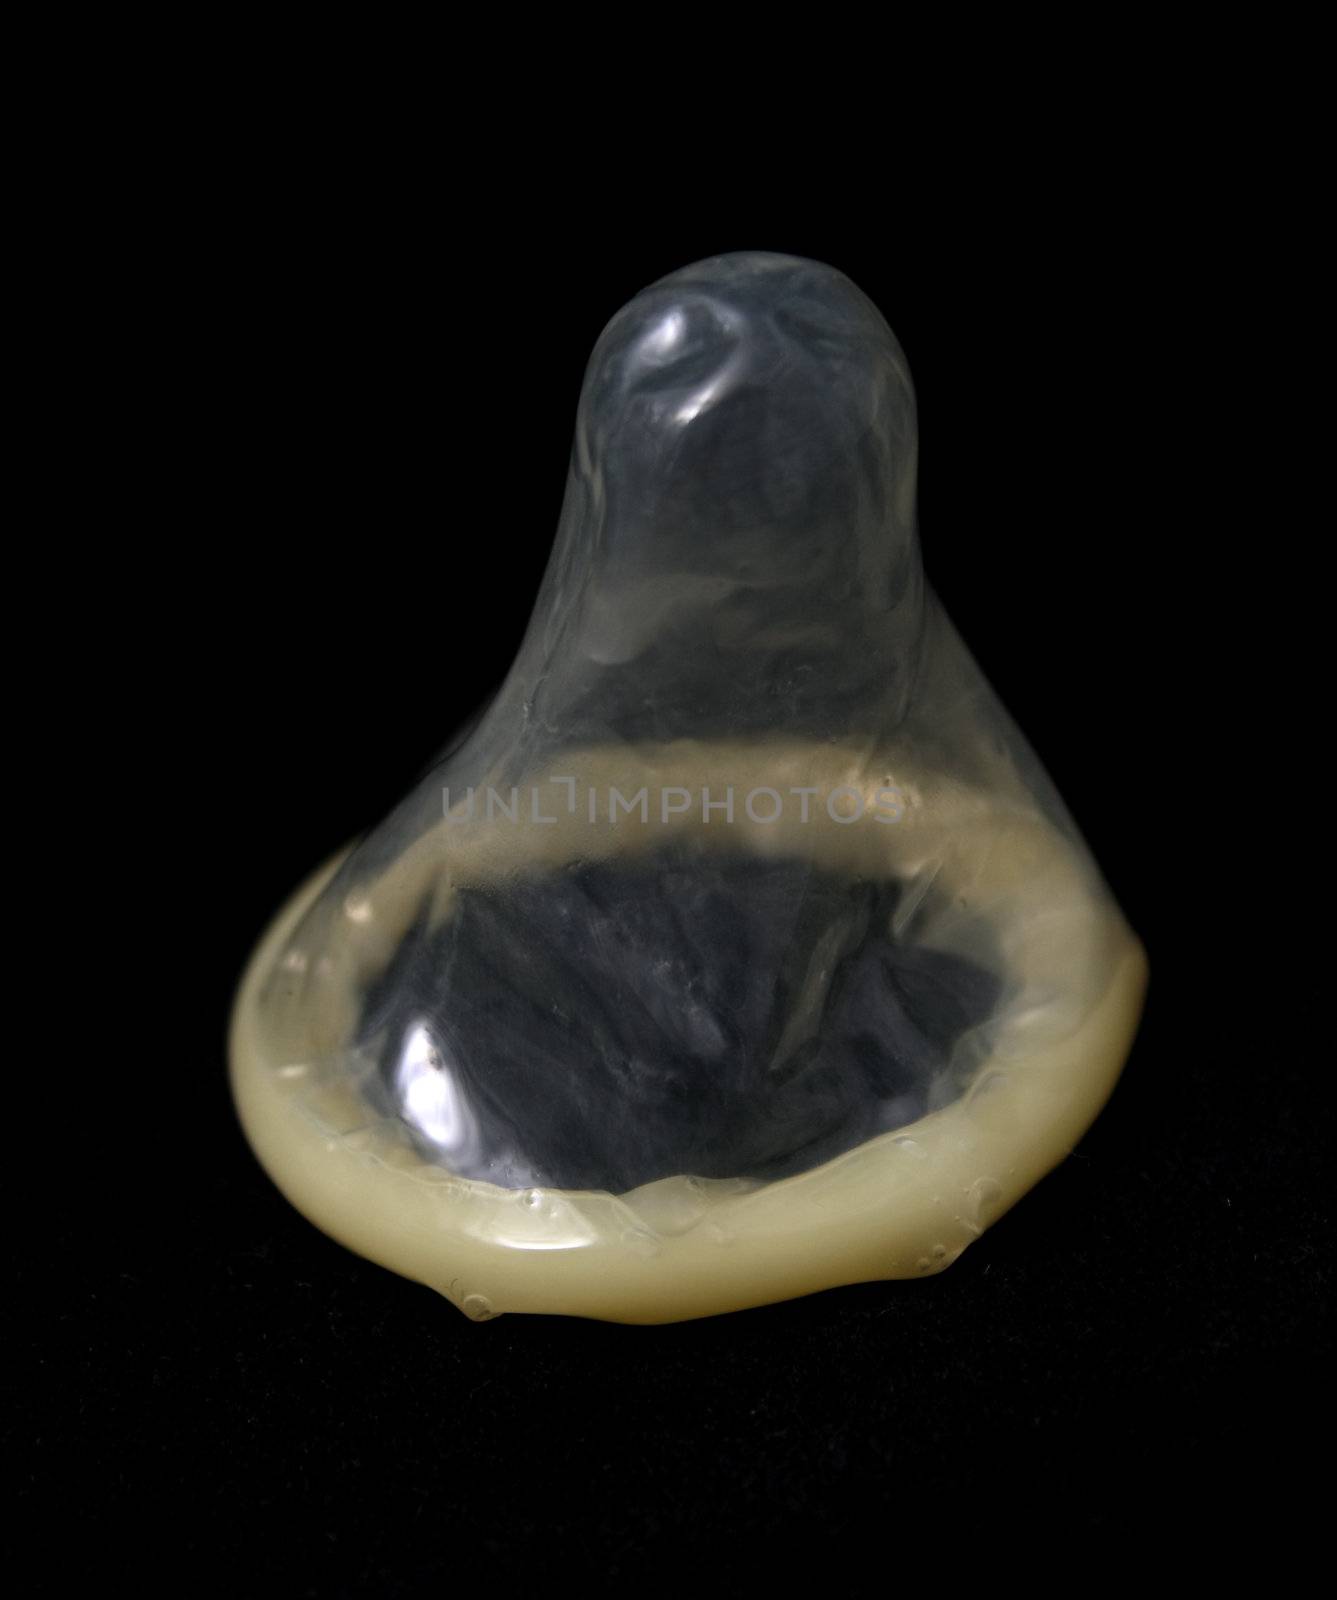 Condom by BengLim